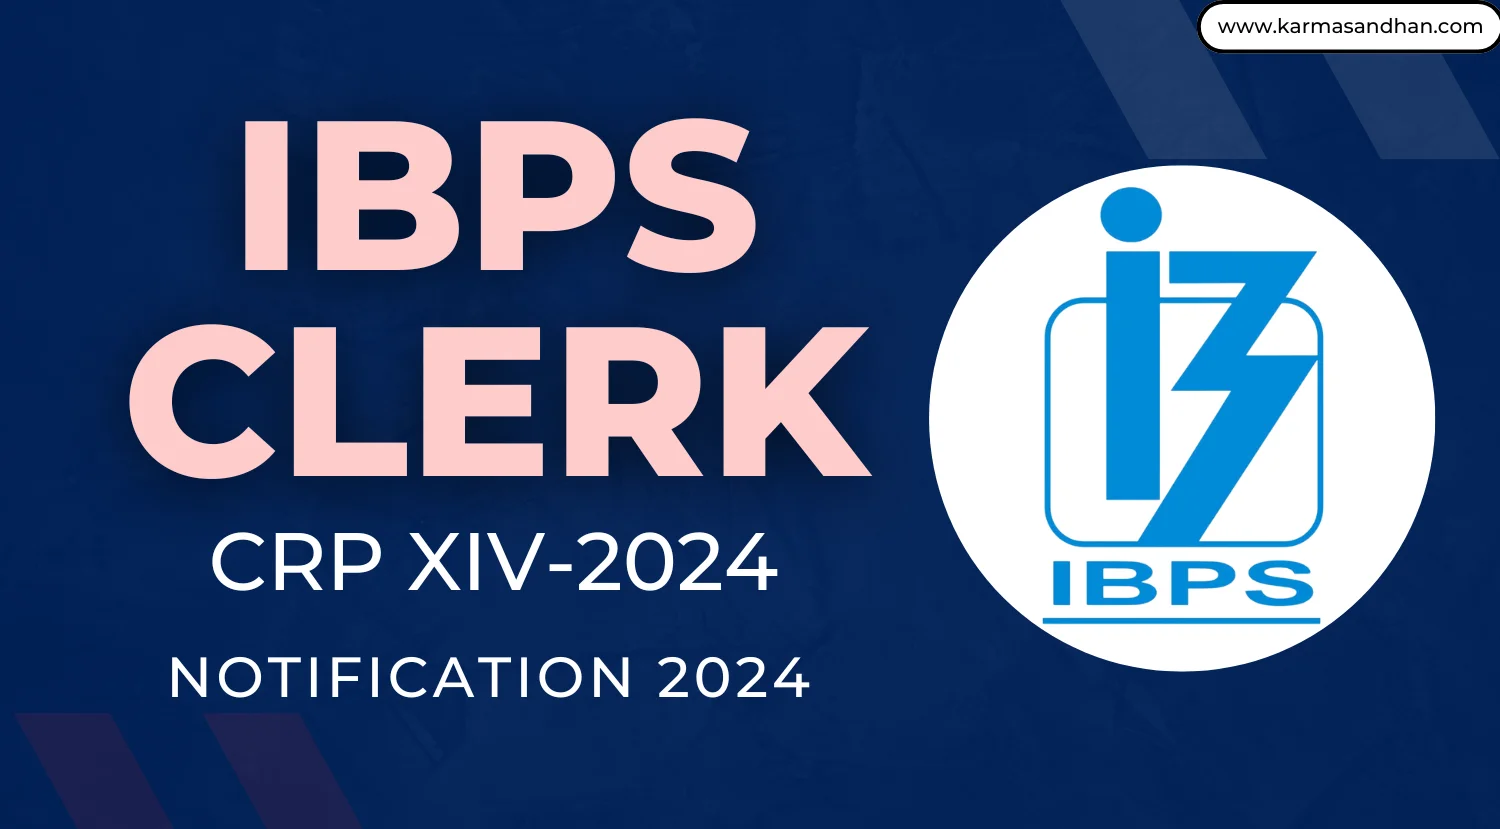 IBPS Clerk Recruitment 2024 Notification, Check Details of IBPS CRP XIV Now